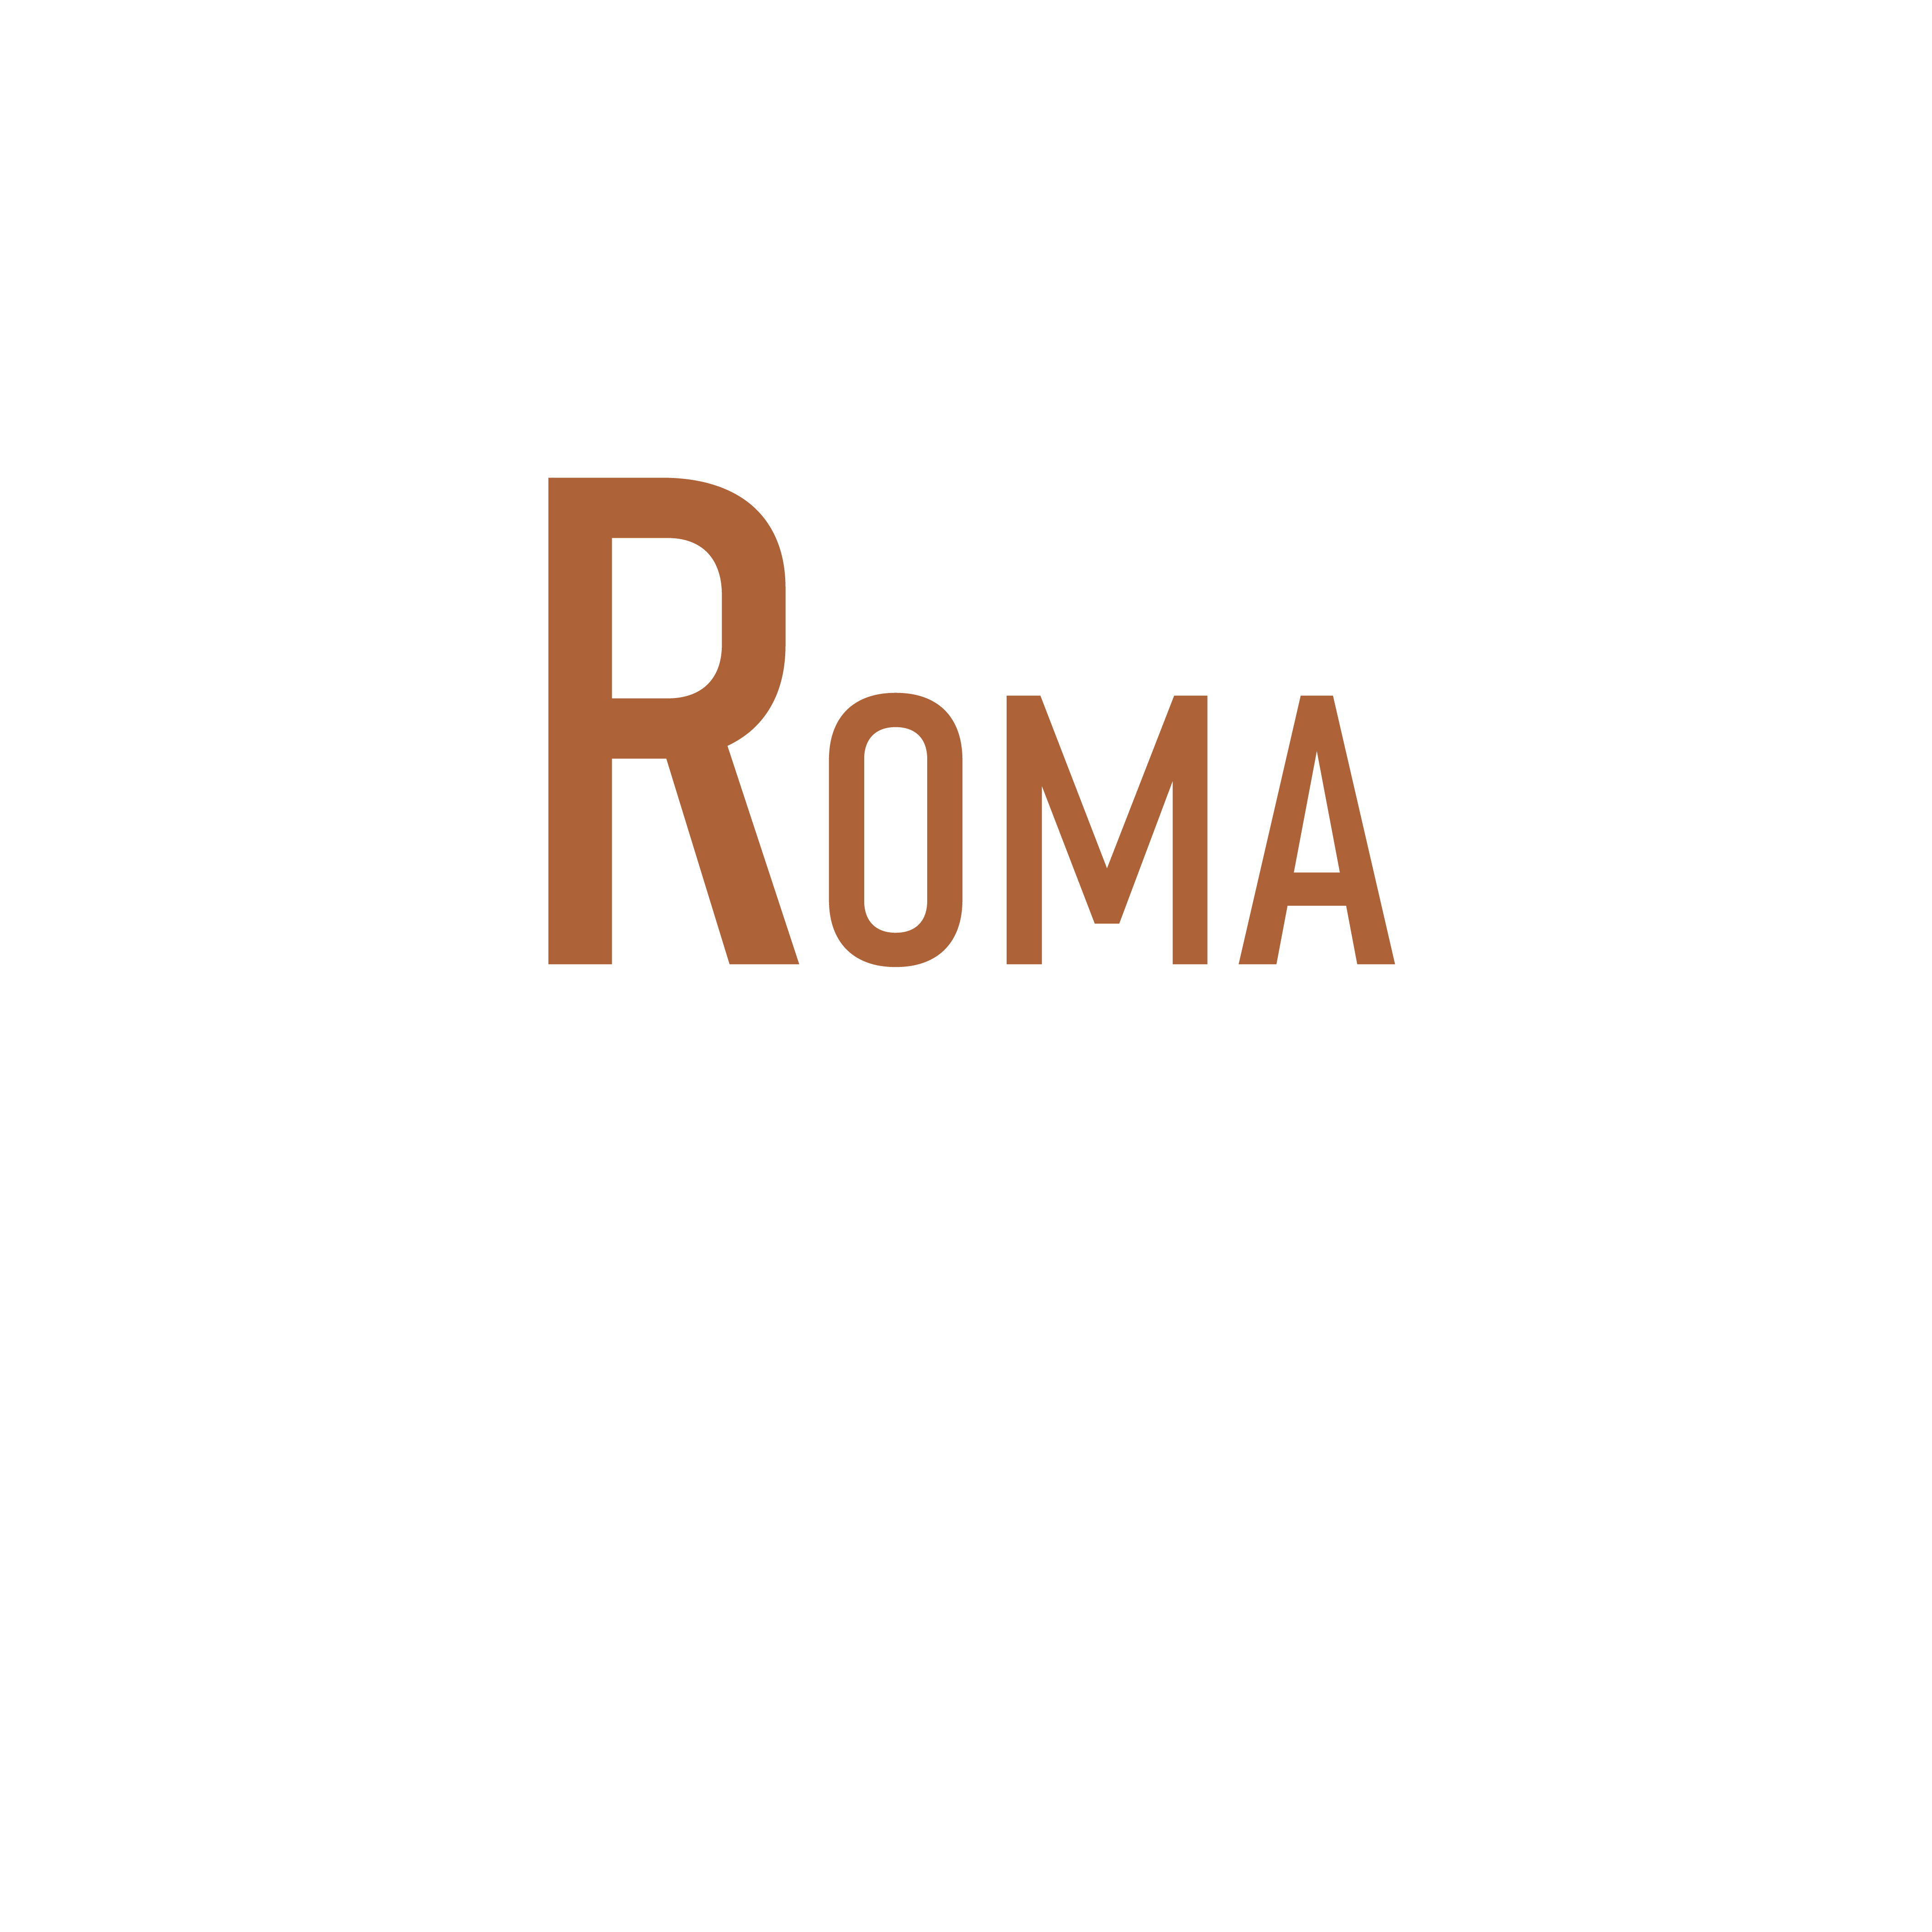 ROMA Consulting